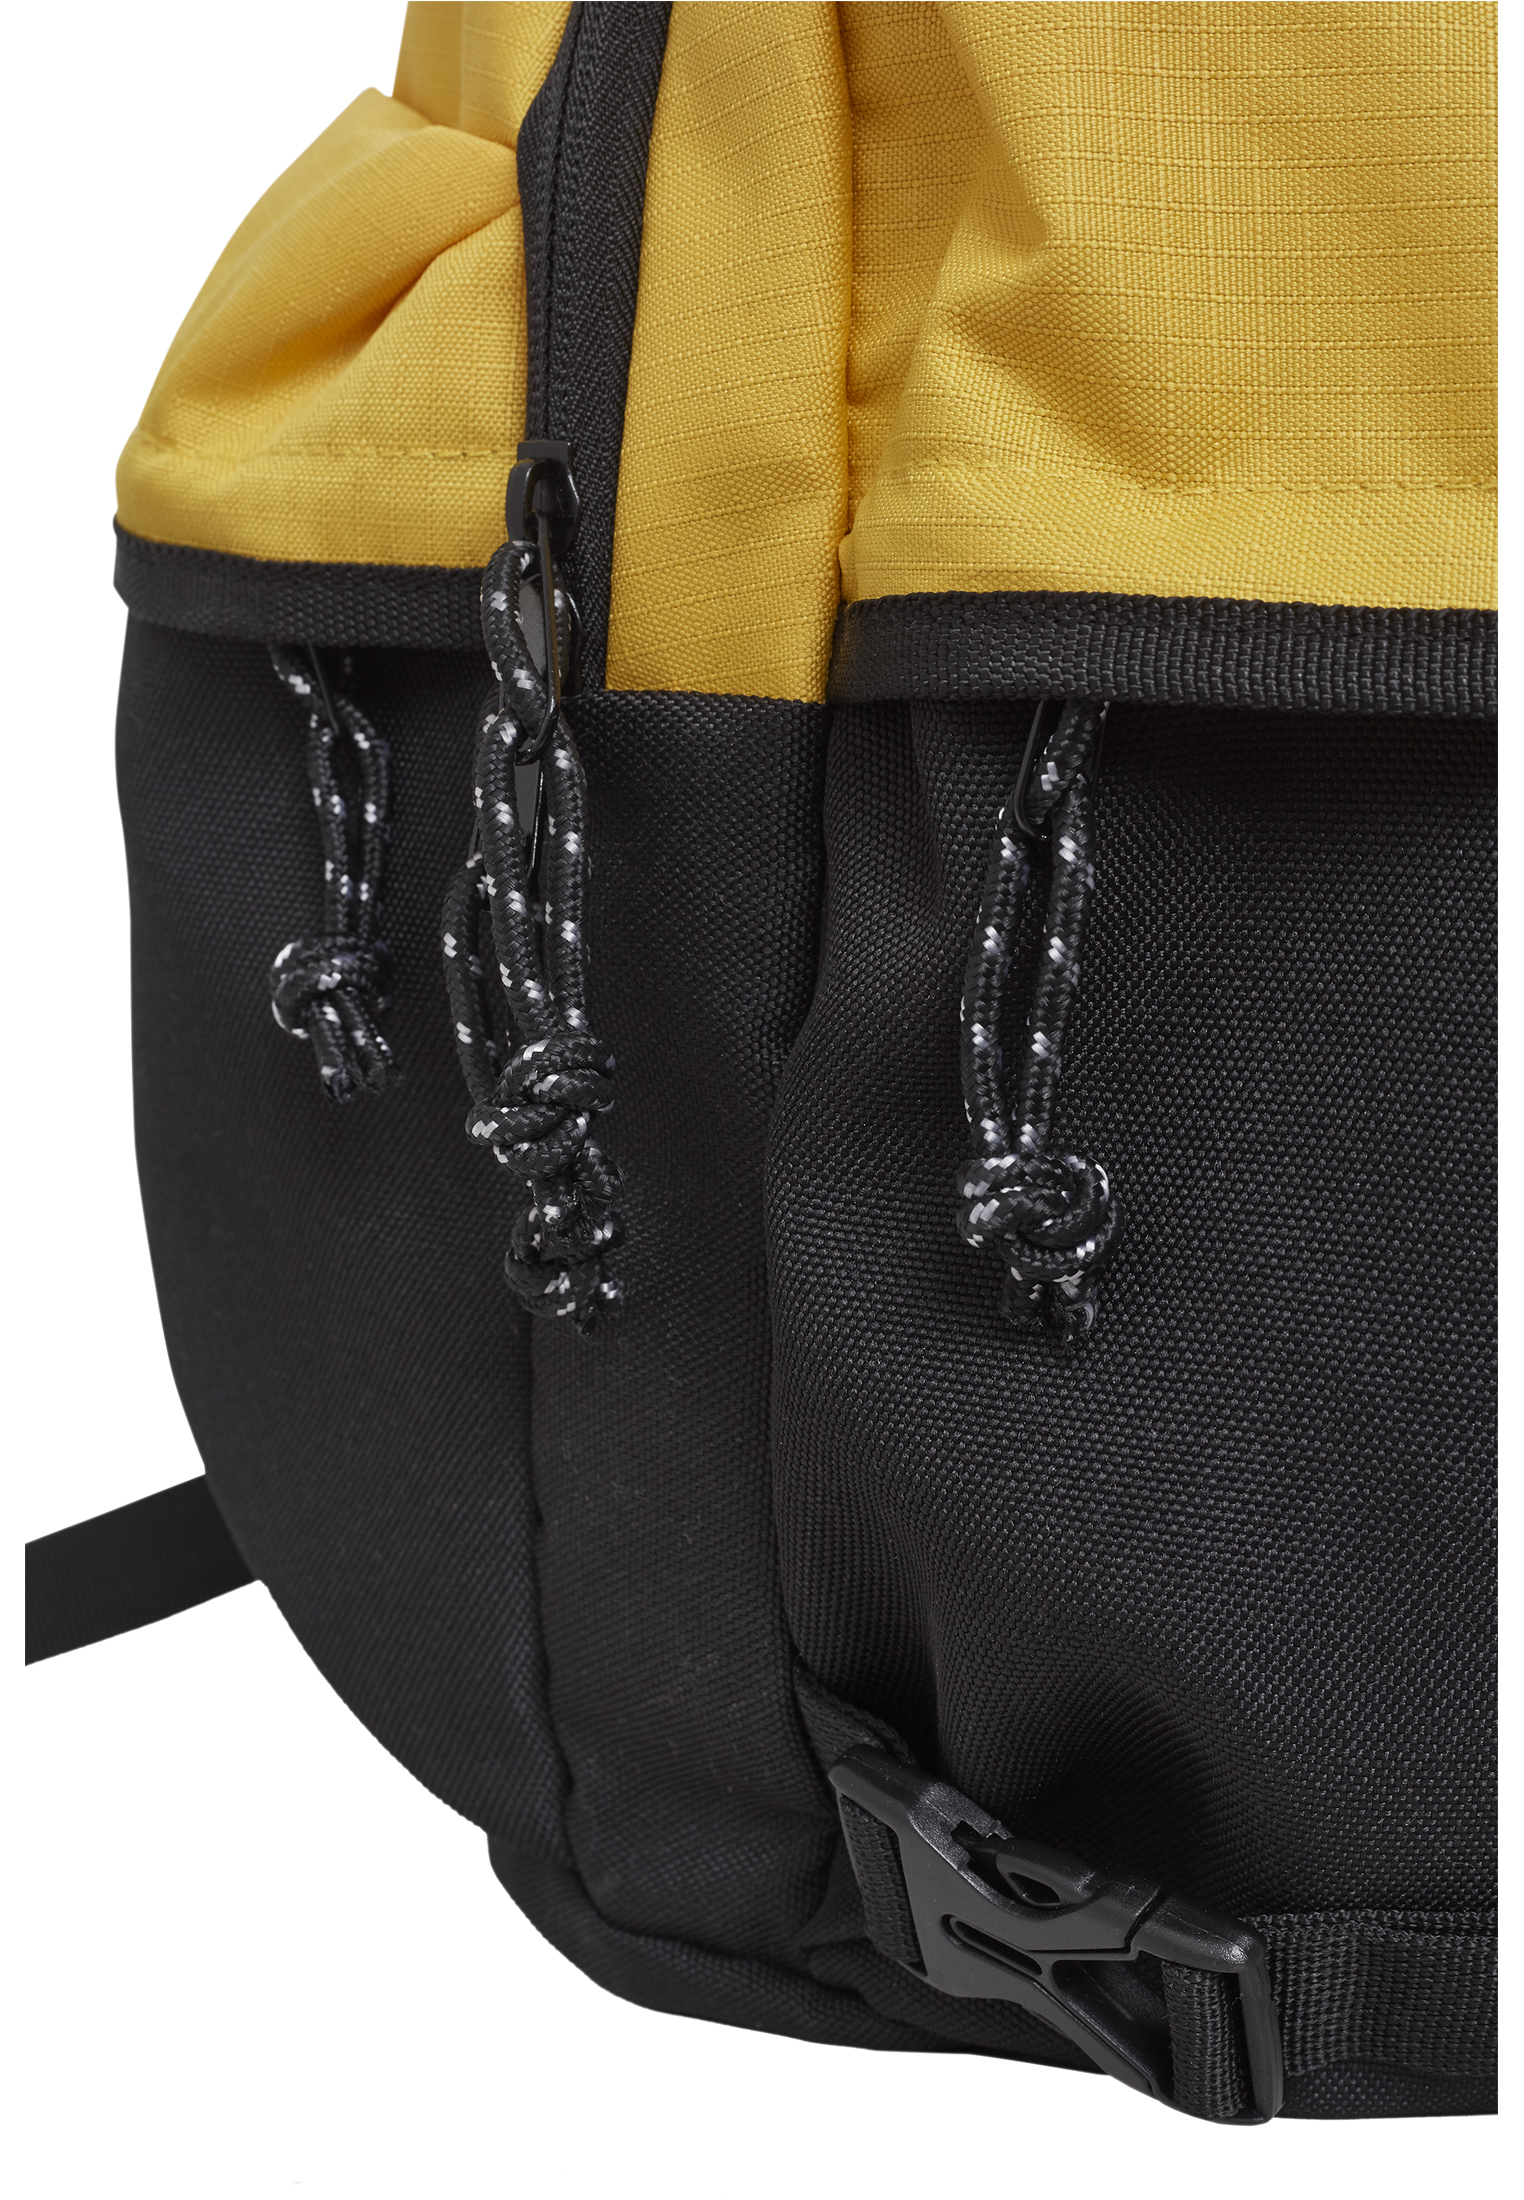 Taschen Backpack Colourblocking in Farbe chrome yellow/black/black